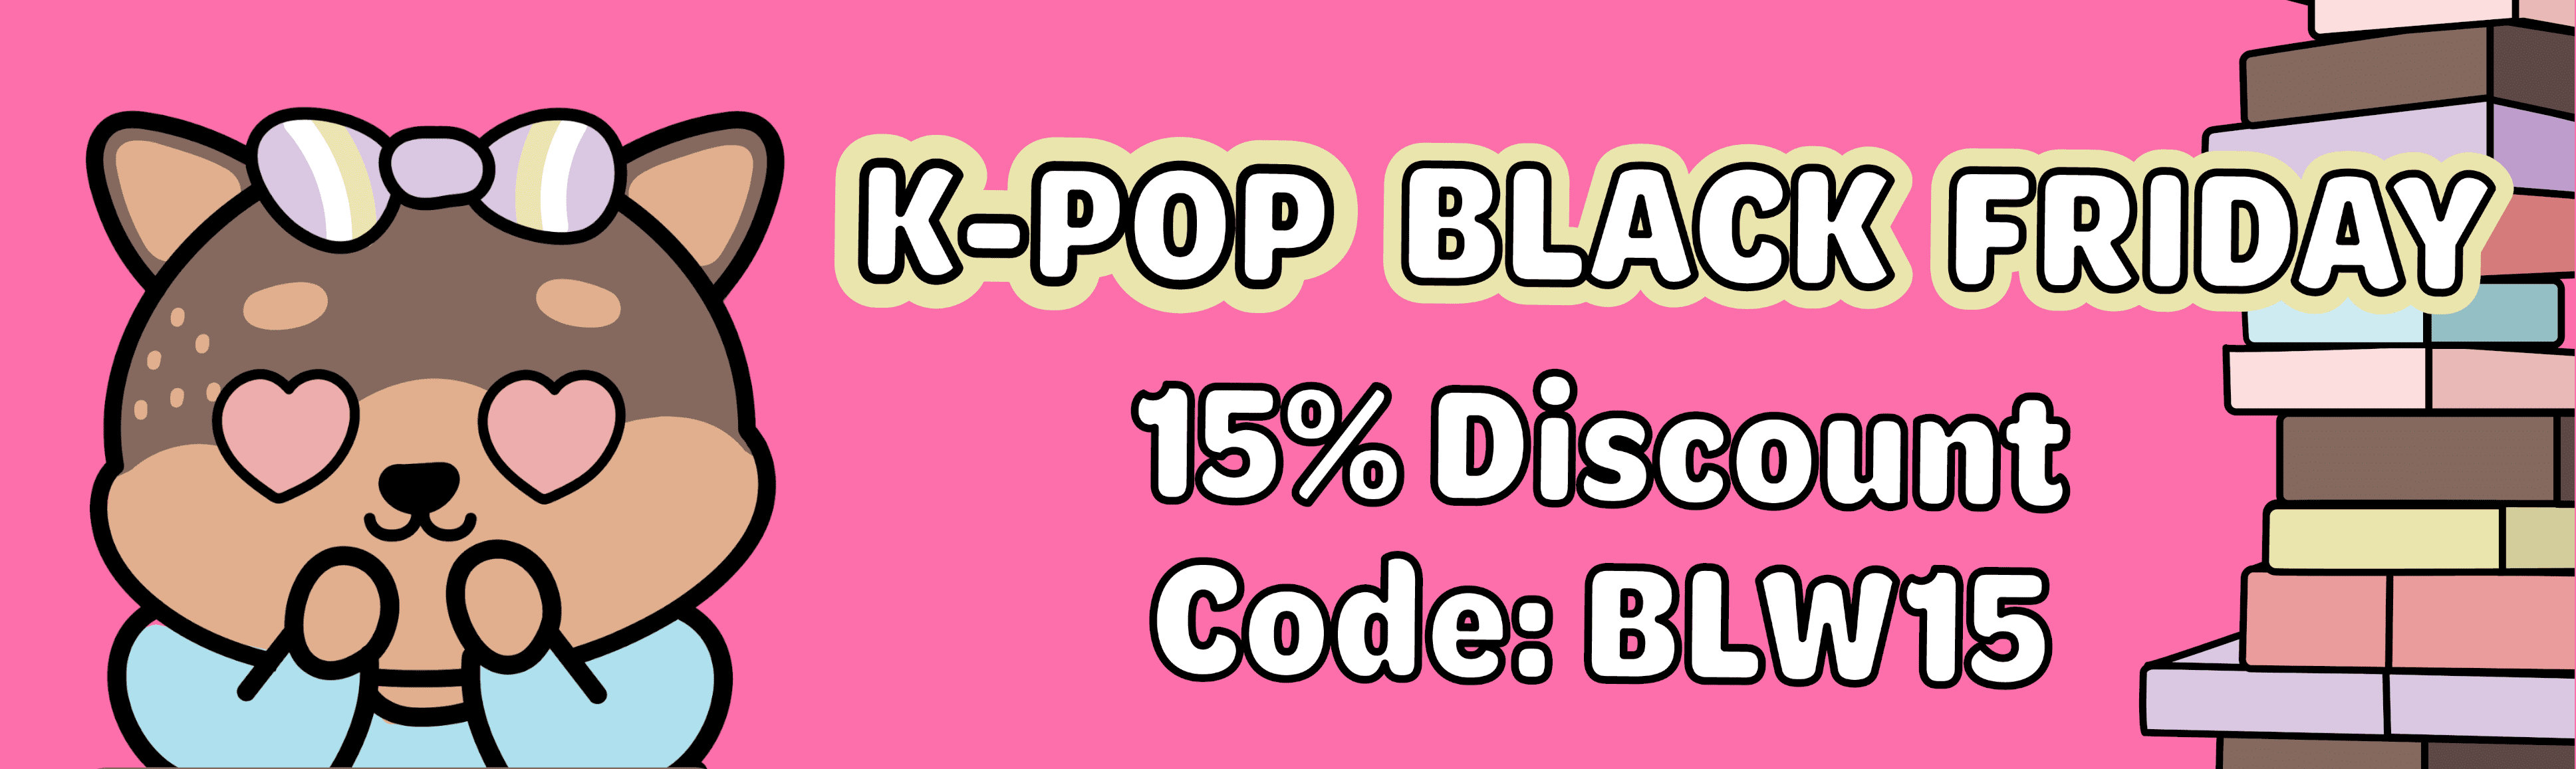 Nolae Back Week Ad - K-Pop Black Friday 15% Discount / Code: BLW15